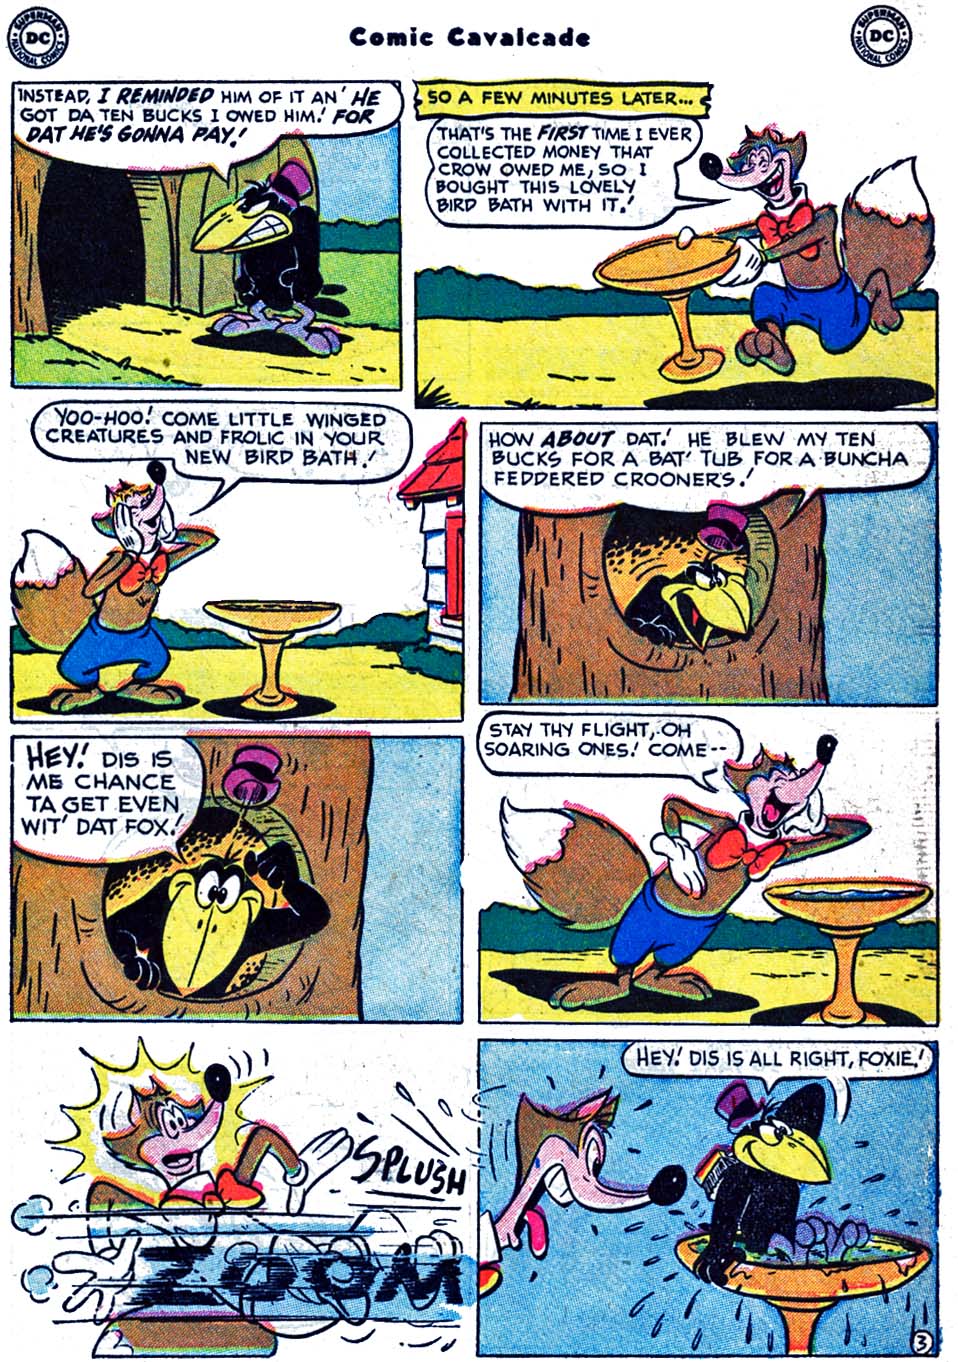 Comic Cavalcade issue 53 - Page 5